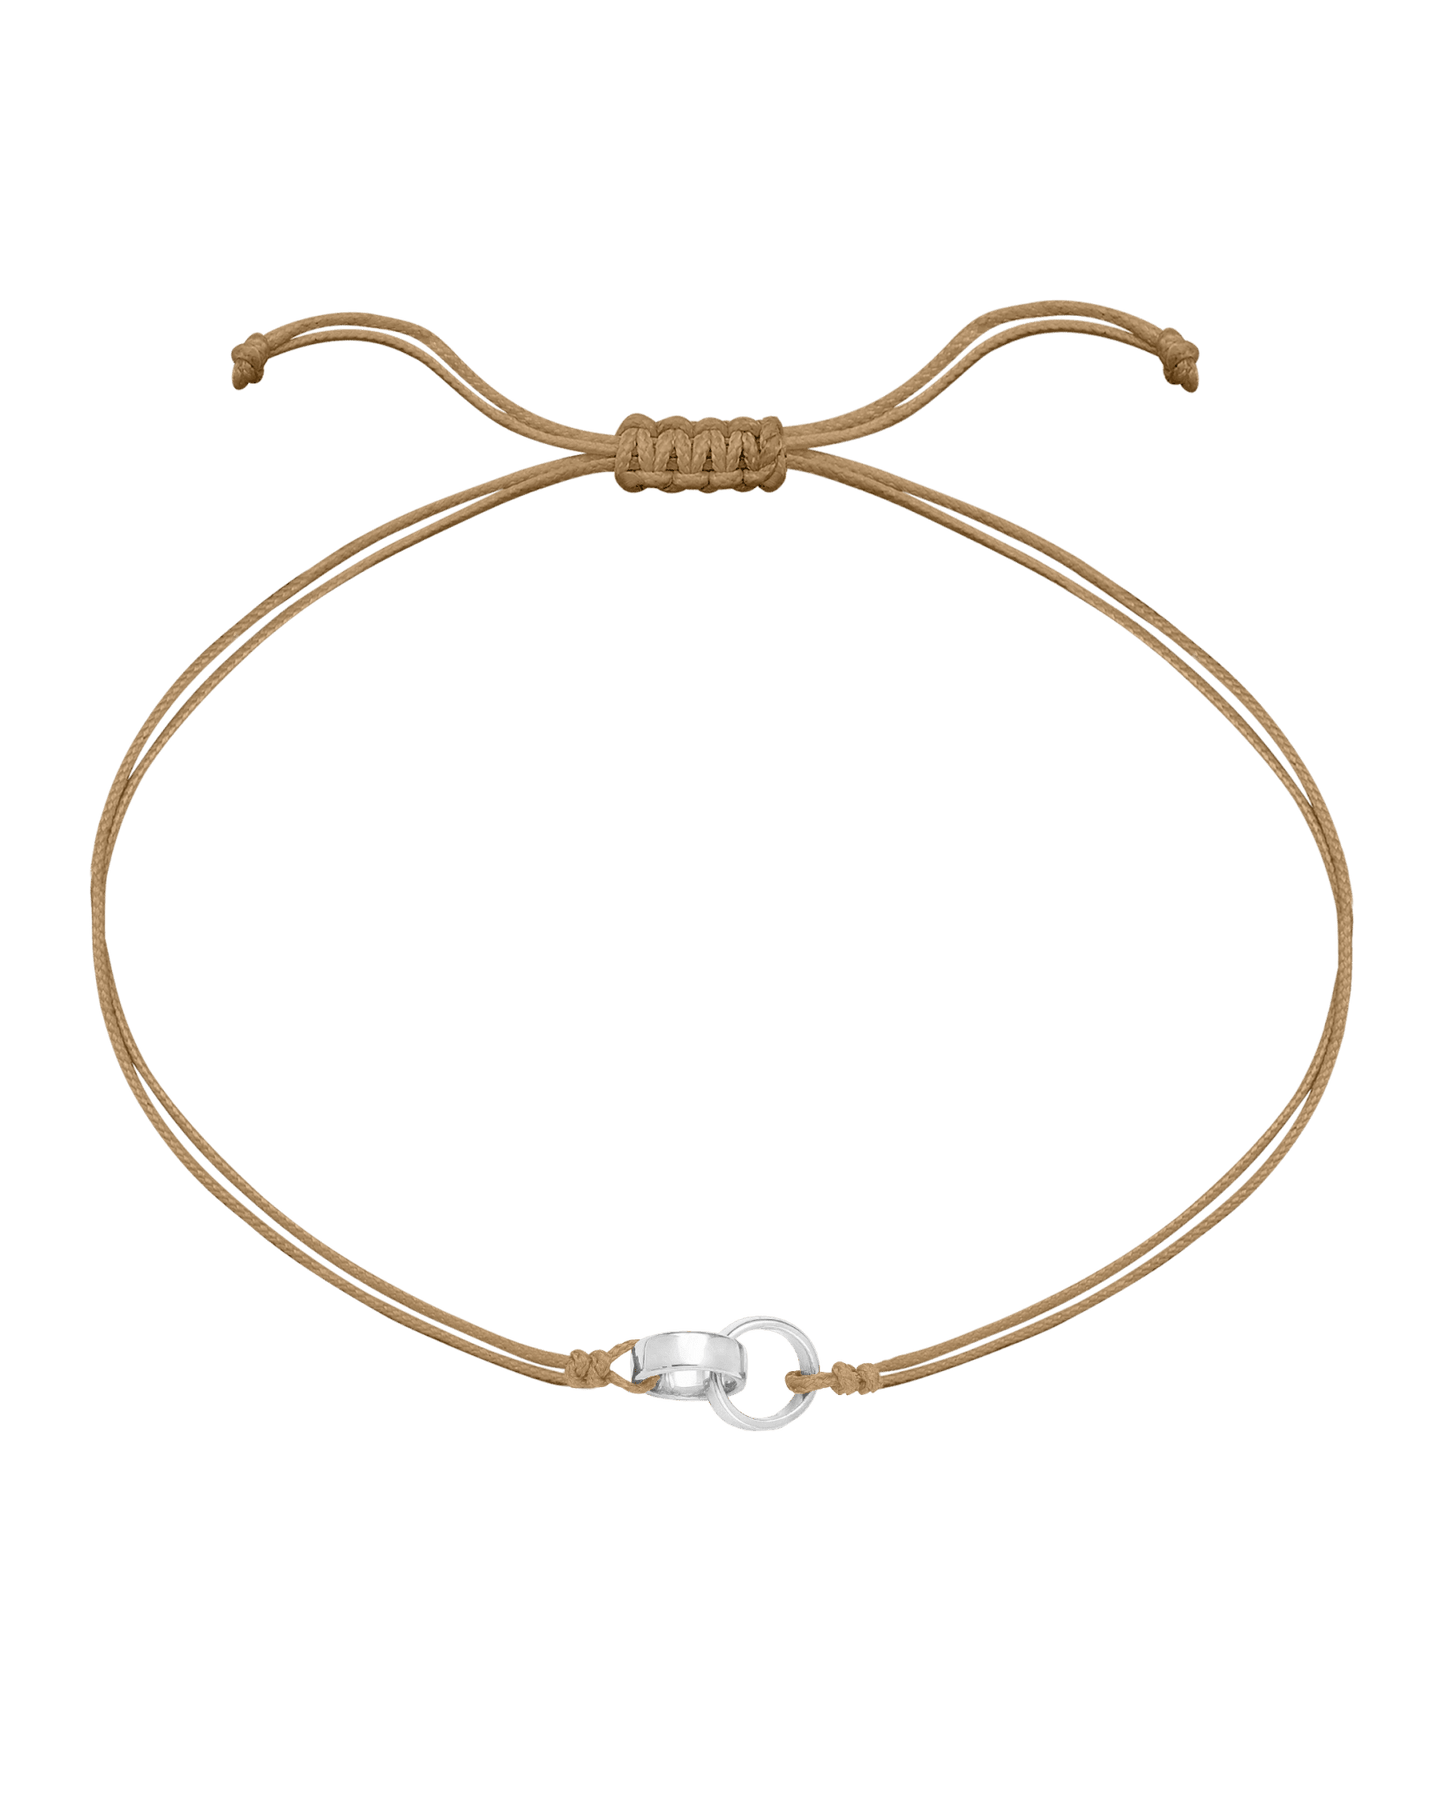 Engravable Links of Love - 14K White Gold Bracelets magal-dev 2 Camel 